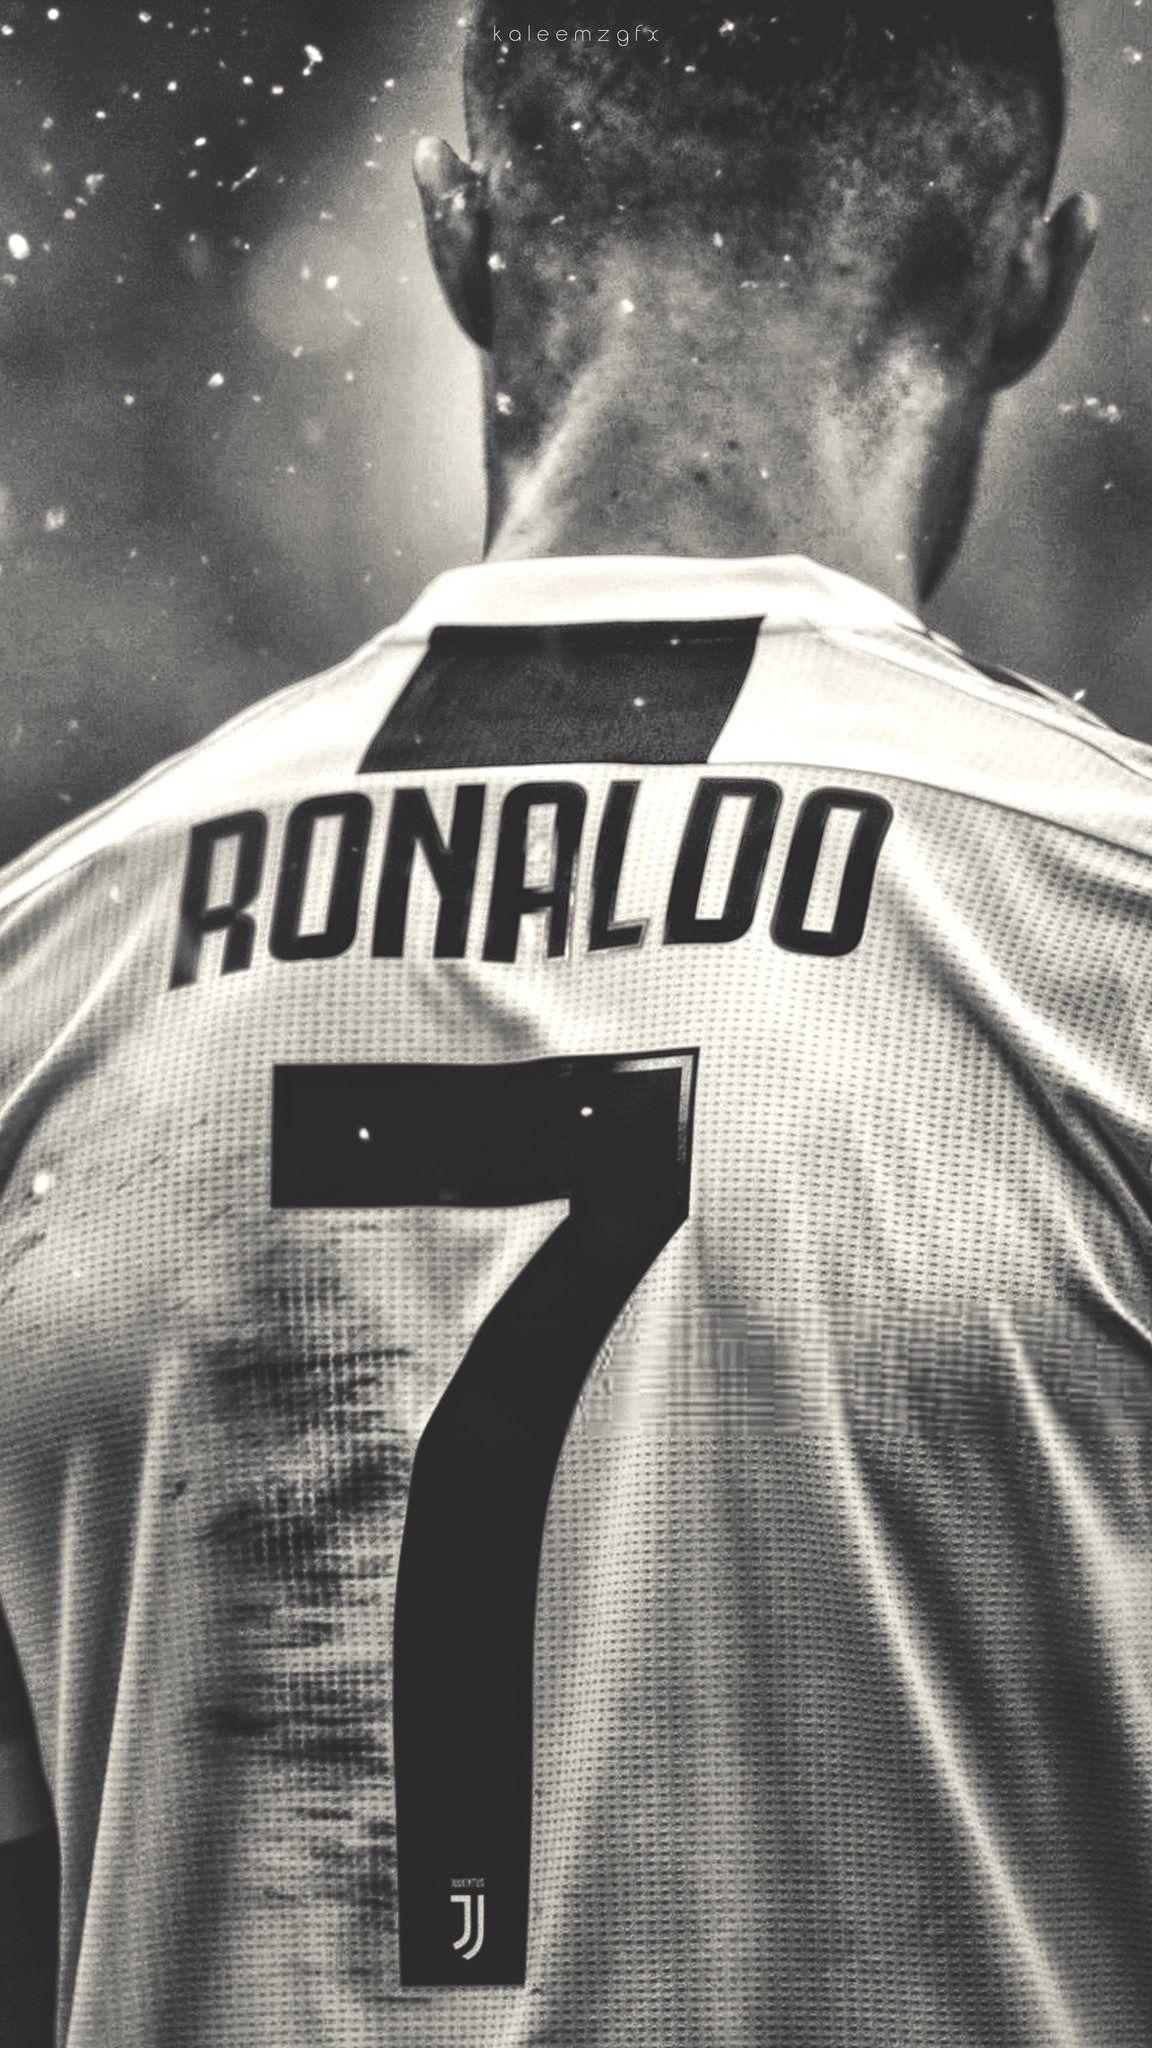 Tải xuống APK Ronaldo Wallpaper Juventus cho Android